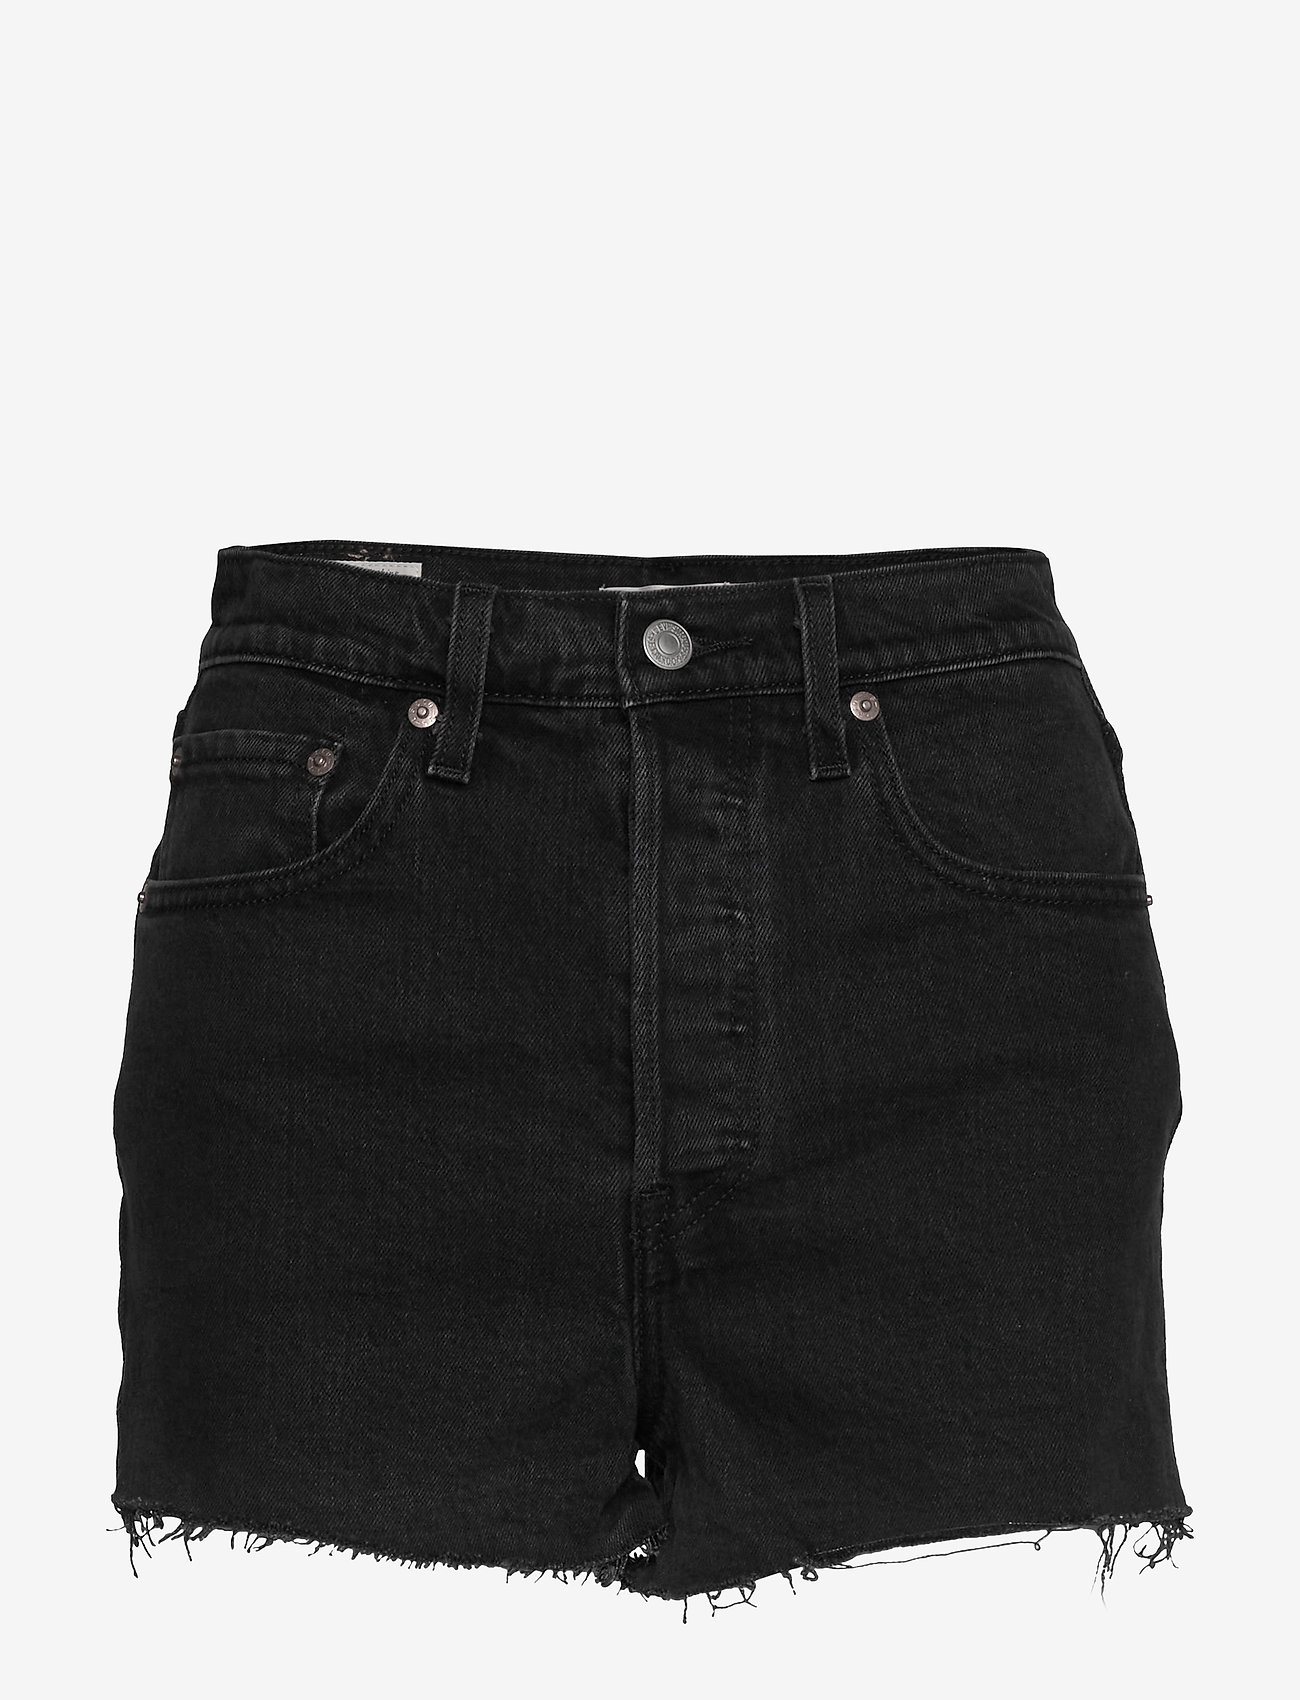 Actualizar 85+ imagen black jean shorts levi's - Thptnganamst.edu.vn